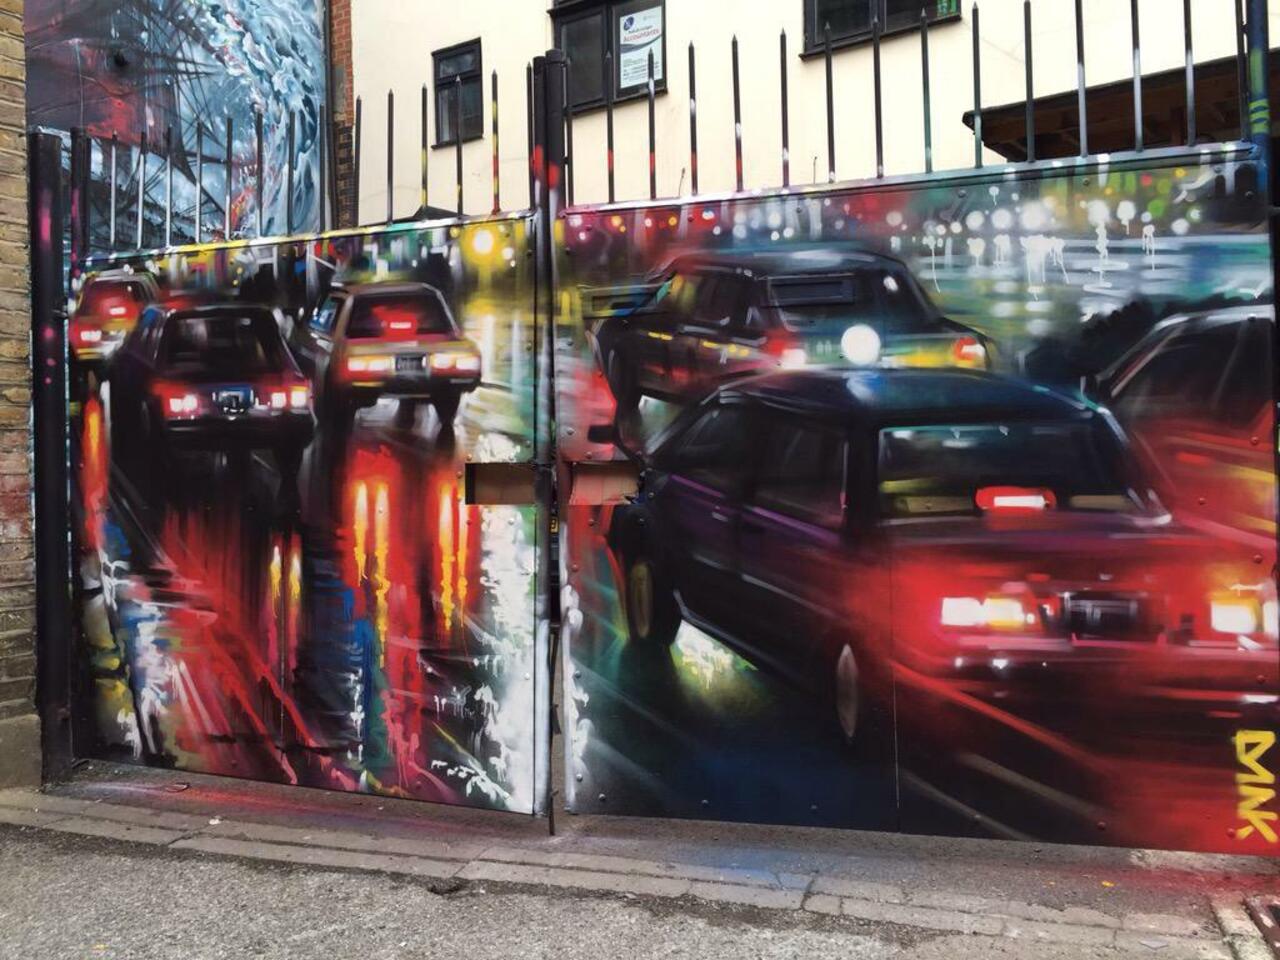 New Street Art by DanKitchener in Brick Lane London 

#art #graffiti #mural #streetart http://t.co/R61xGjvLFZ